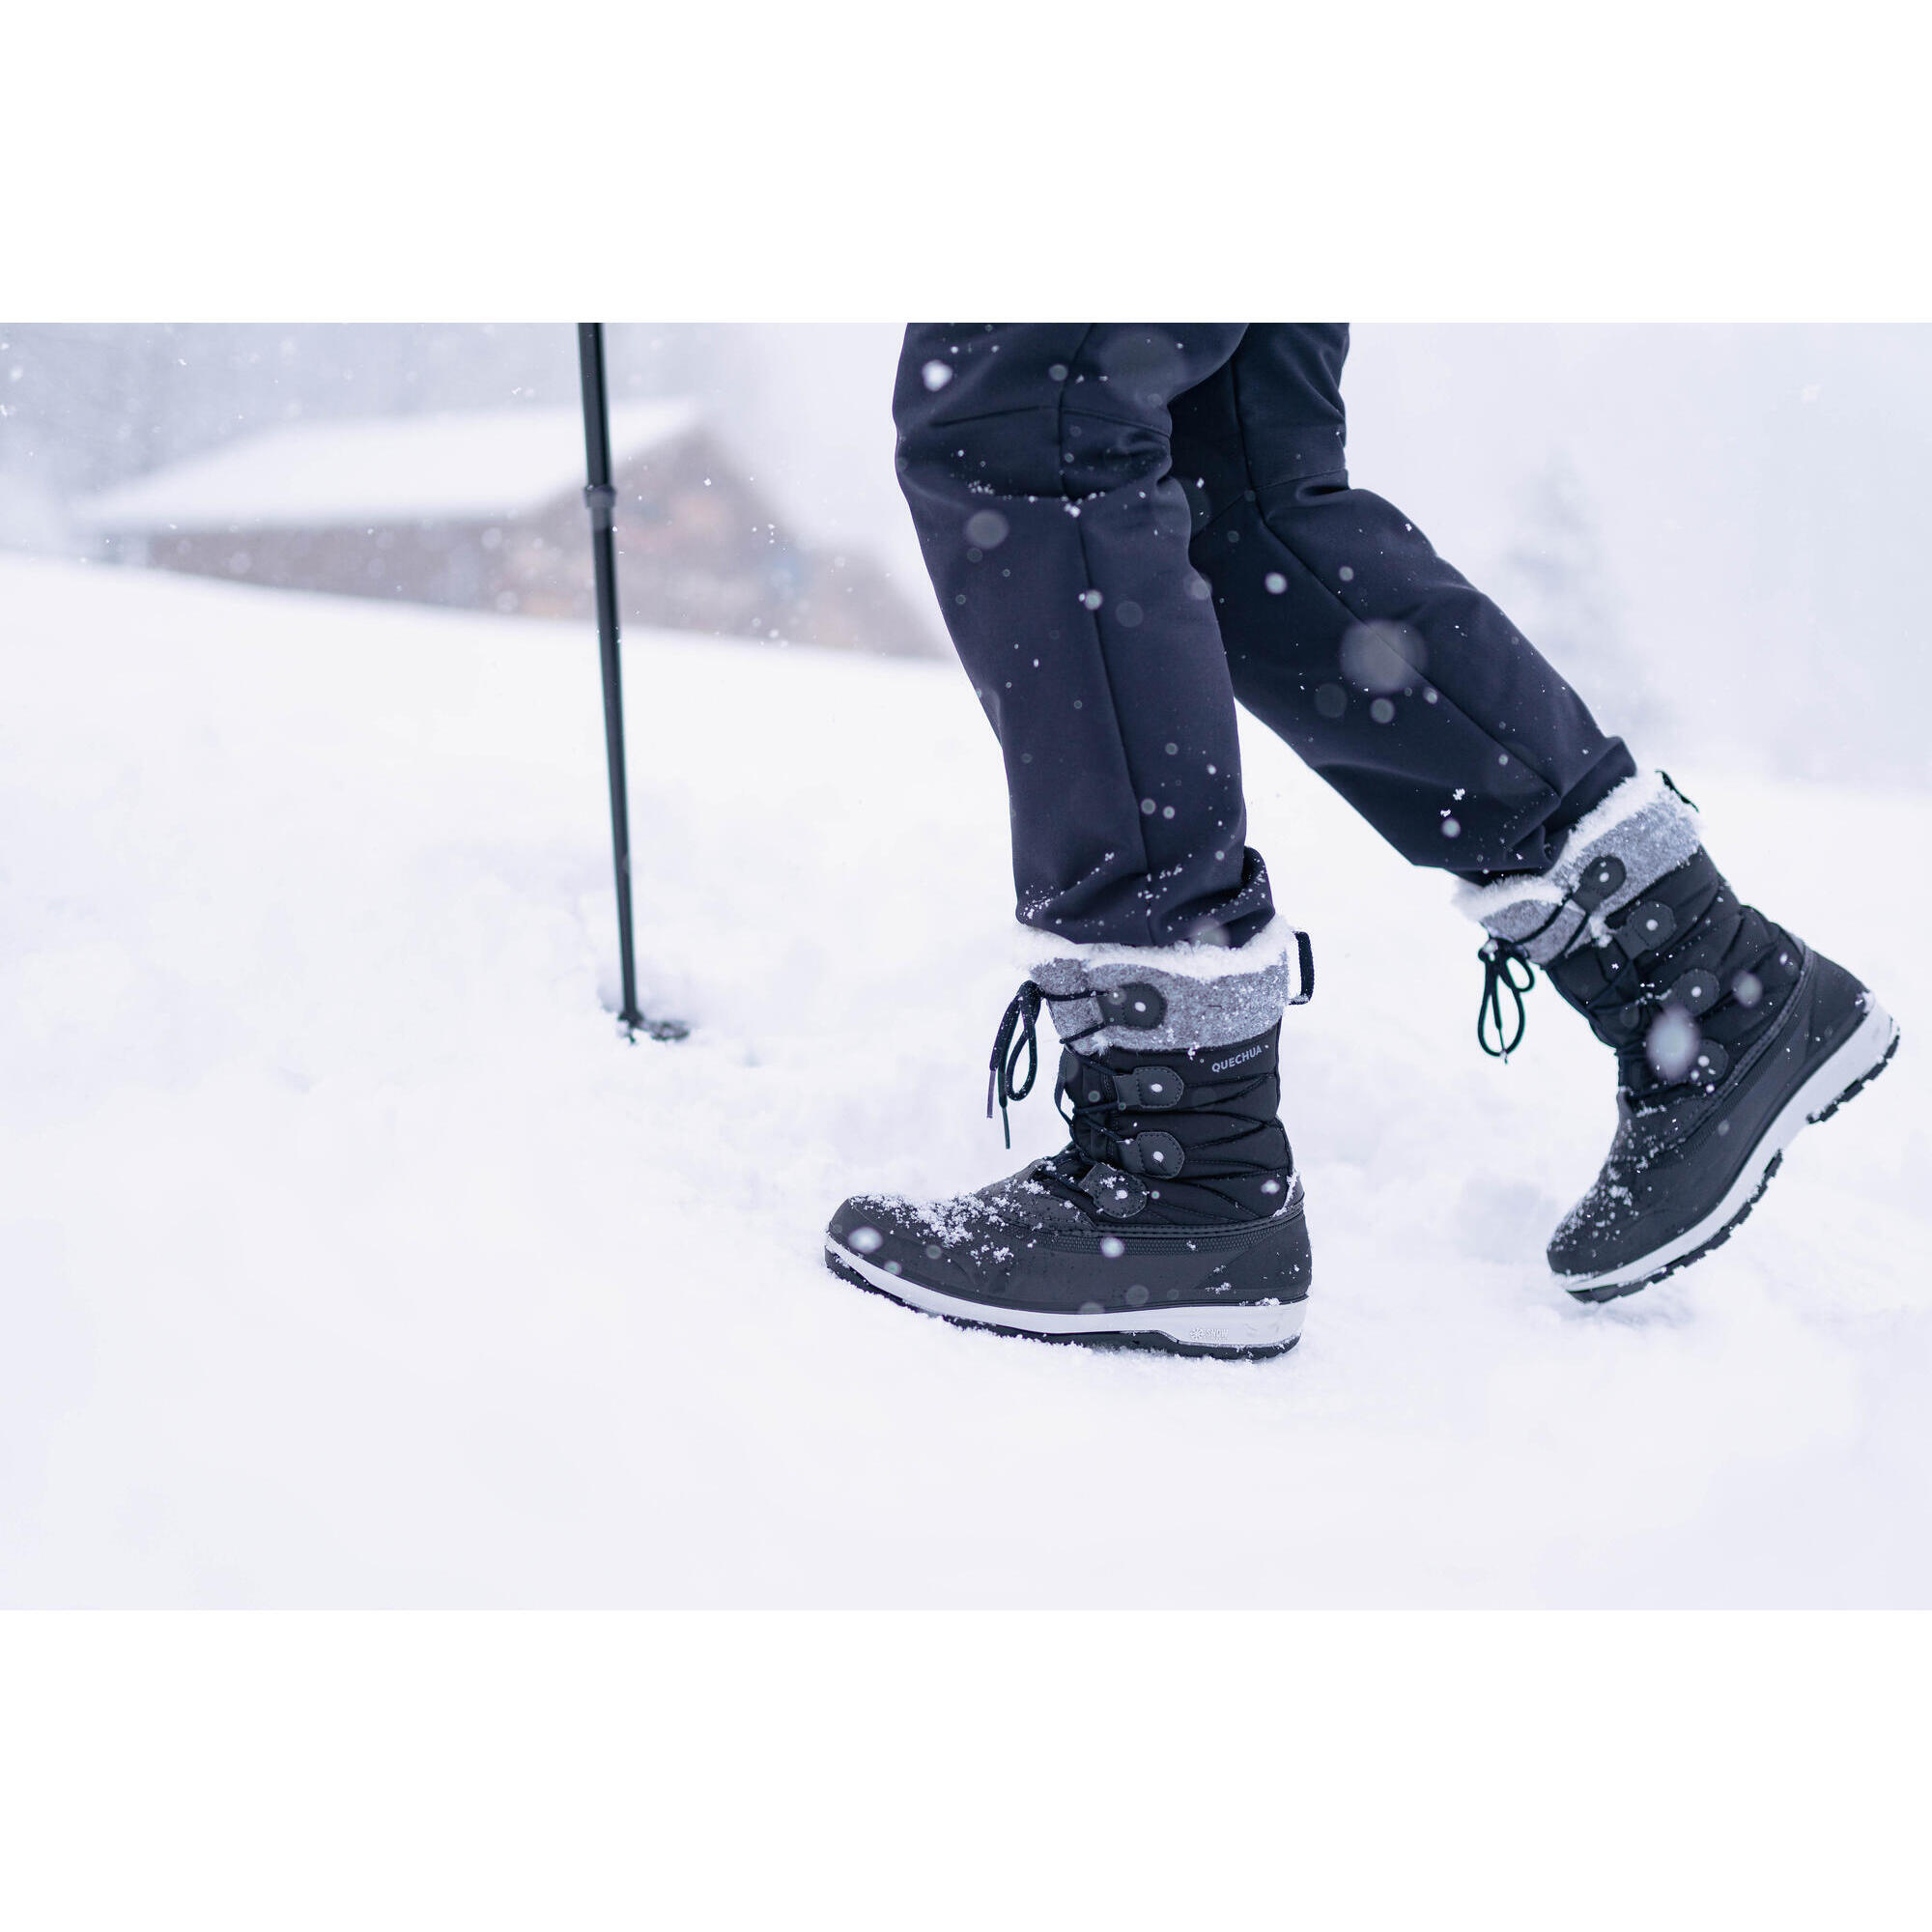 Women's waterproof warm snow boots - SH500 high boot - Decathlon